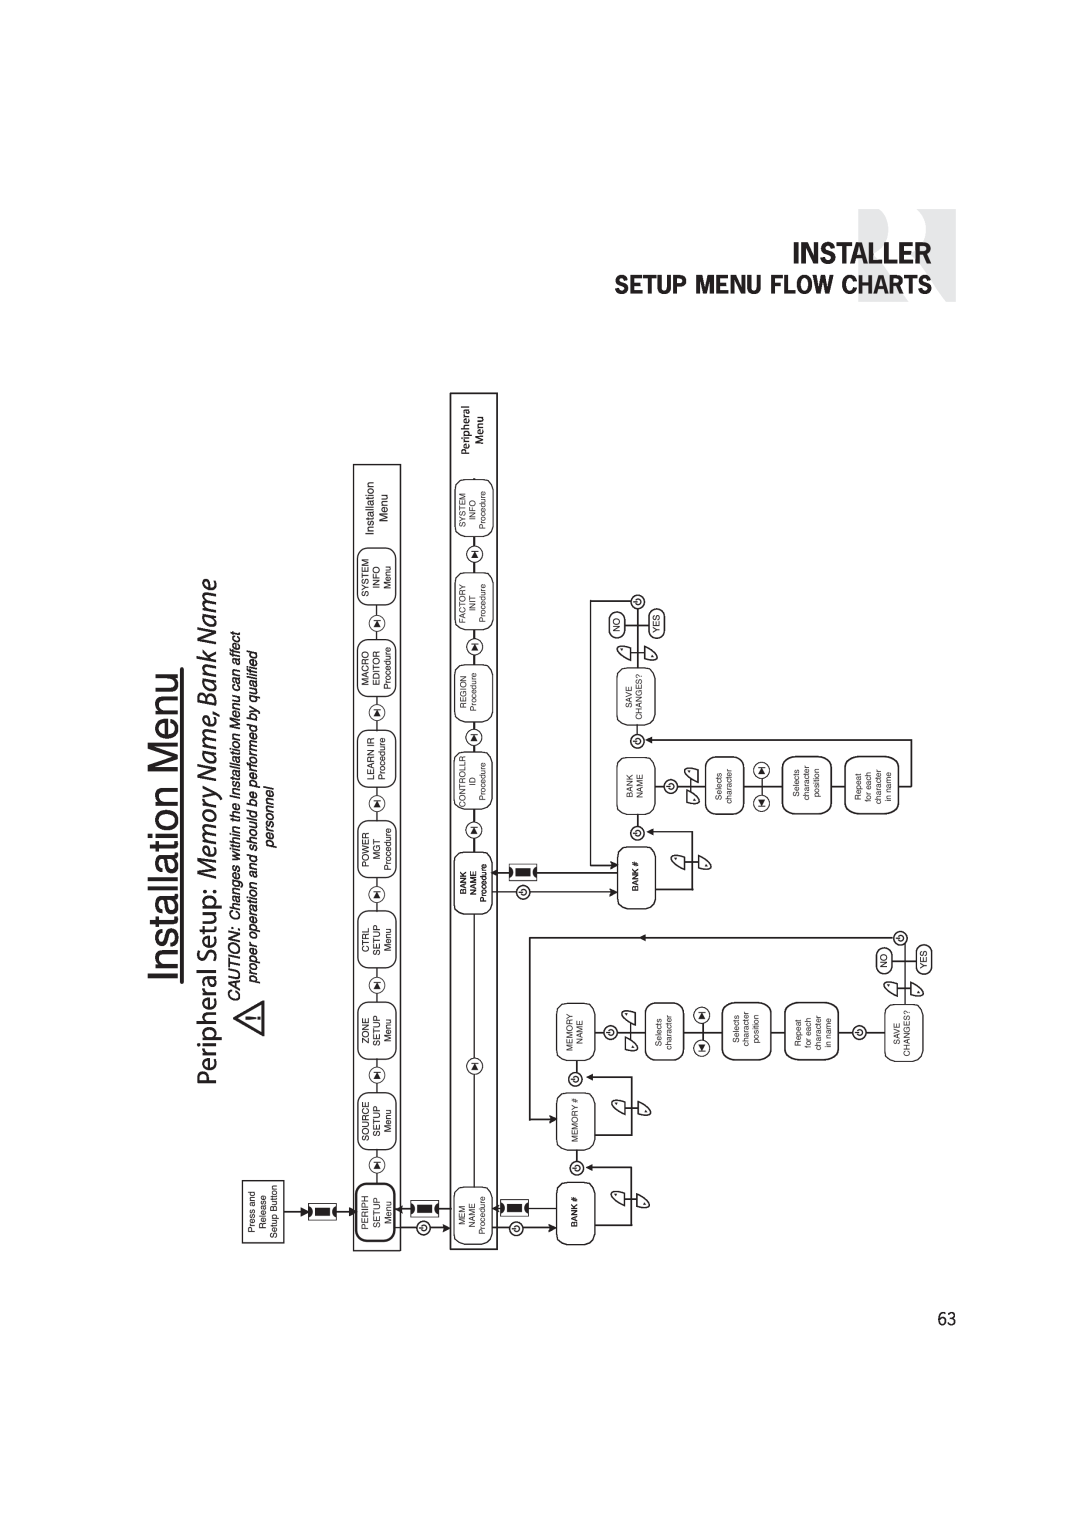 Russound CAM6.6T-S1 instruction manual Installer Setup Menu Flow Charts, Peripheral Setup: Memory Name, Bank Name 